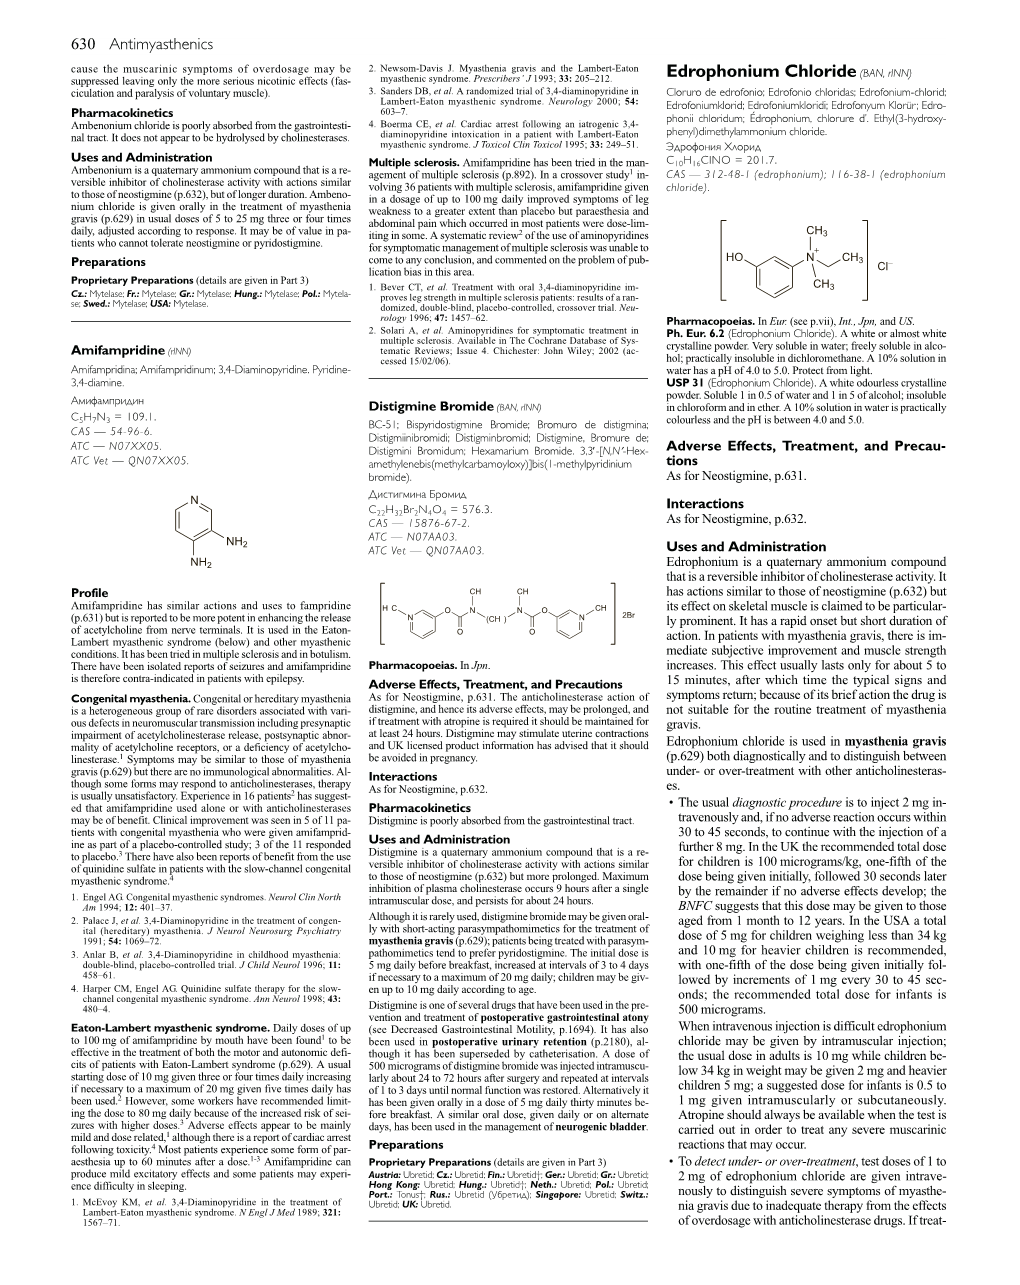 Edrophonium Chloride(BAN, Rinn)